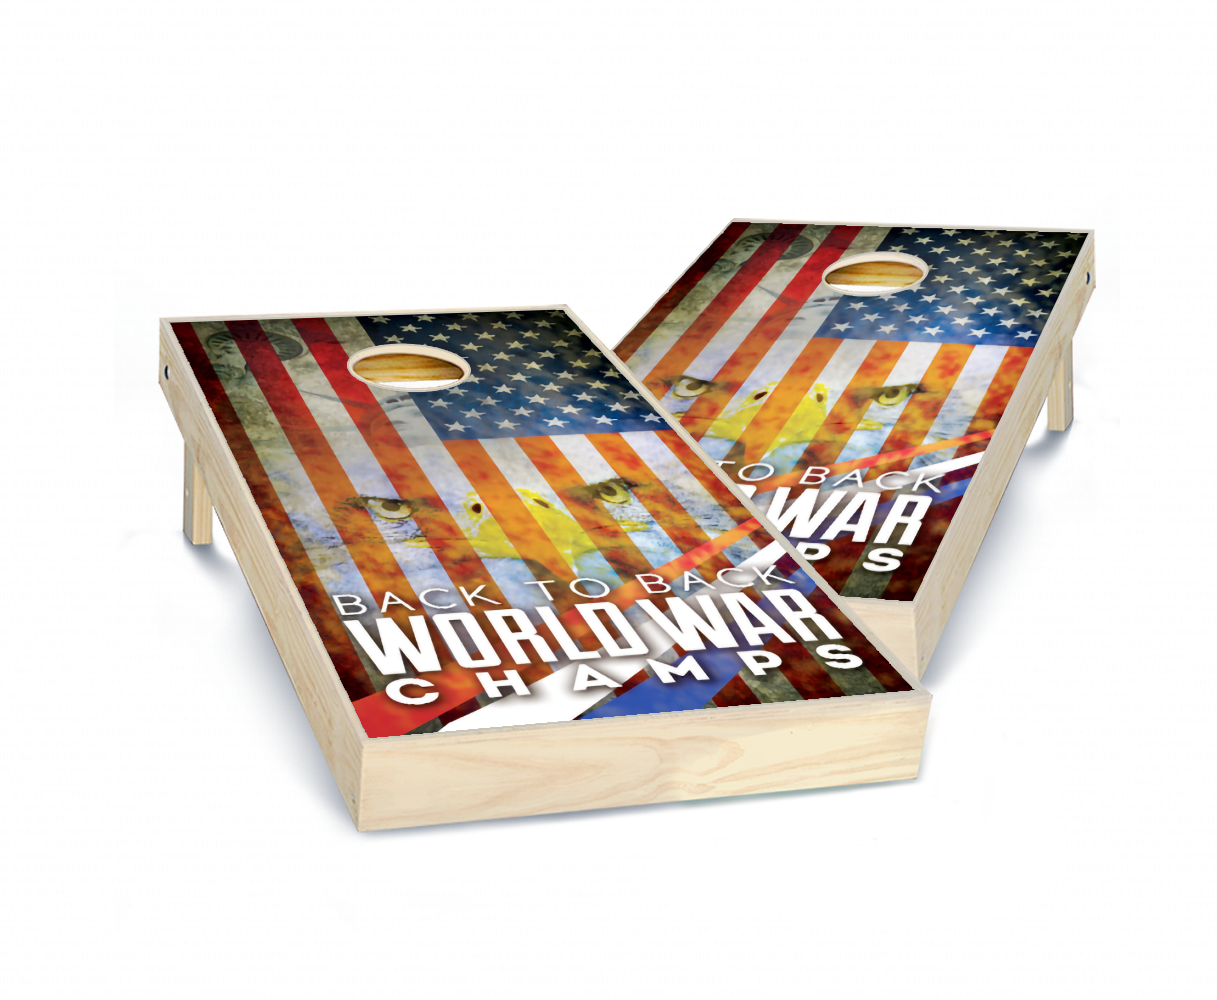 "Back to Back World War Champs" Cornhole Boards